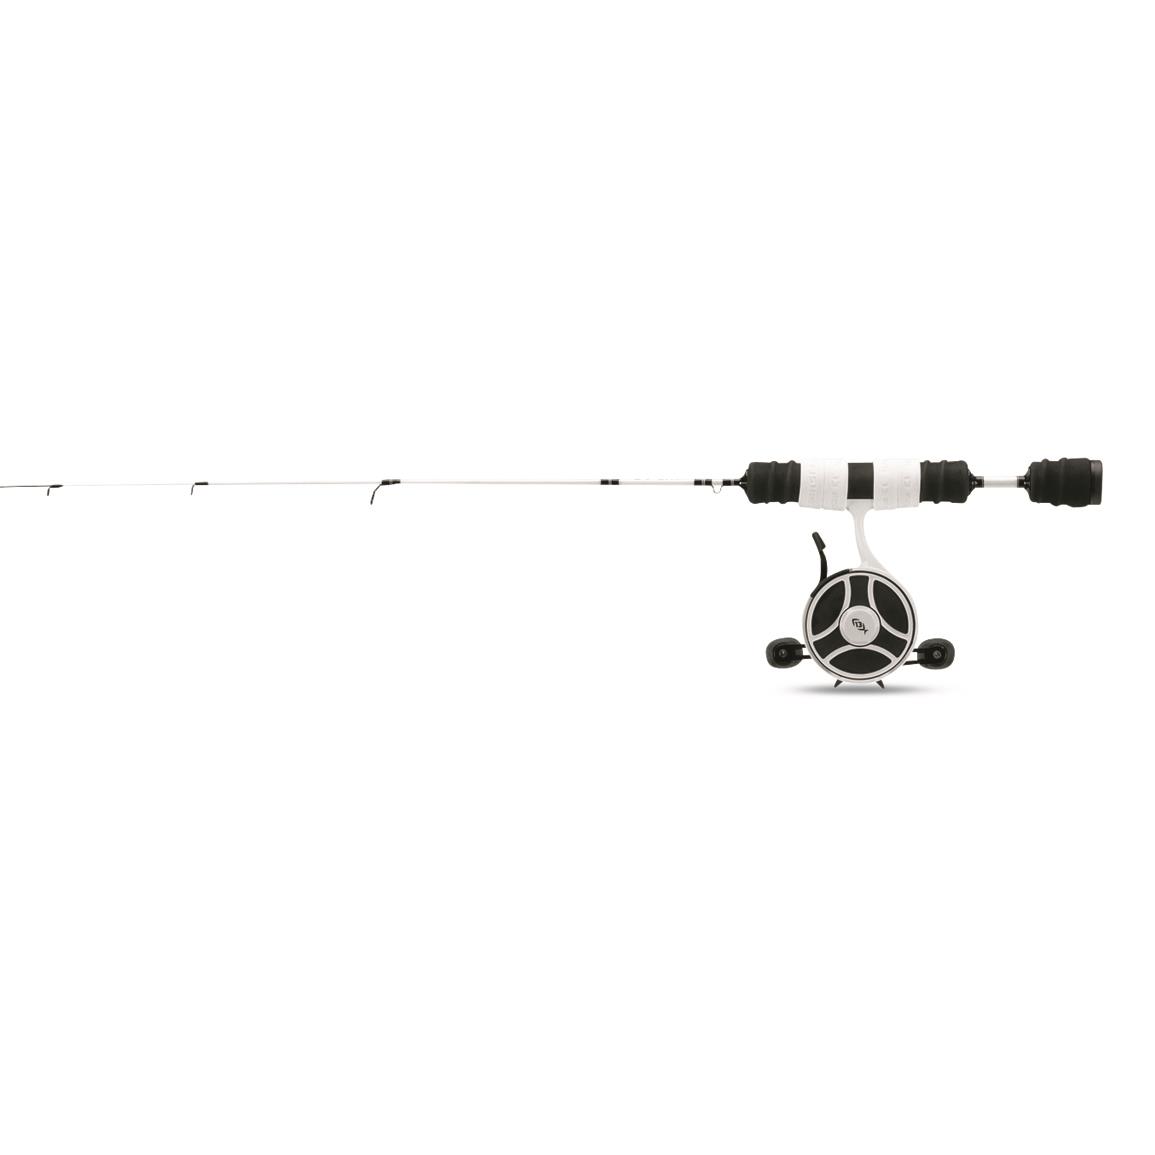 Pflueger Trion Fenwick HMG Ice Fishing Spinning Combo, 28 Length, Medium  Light Power - 724159, Ice Fishing Combos at Sportsman's Guide